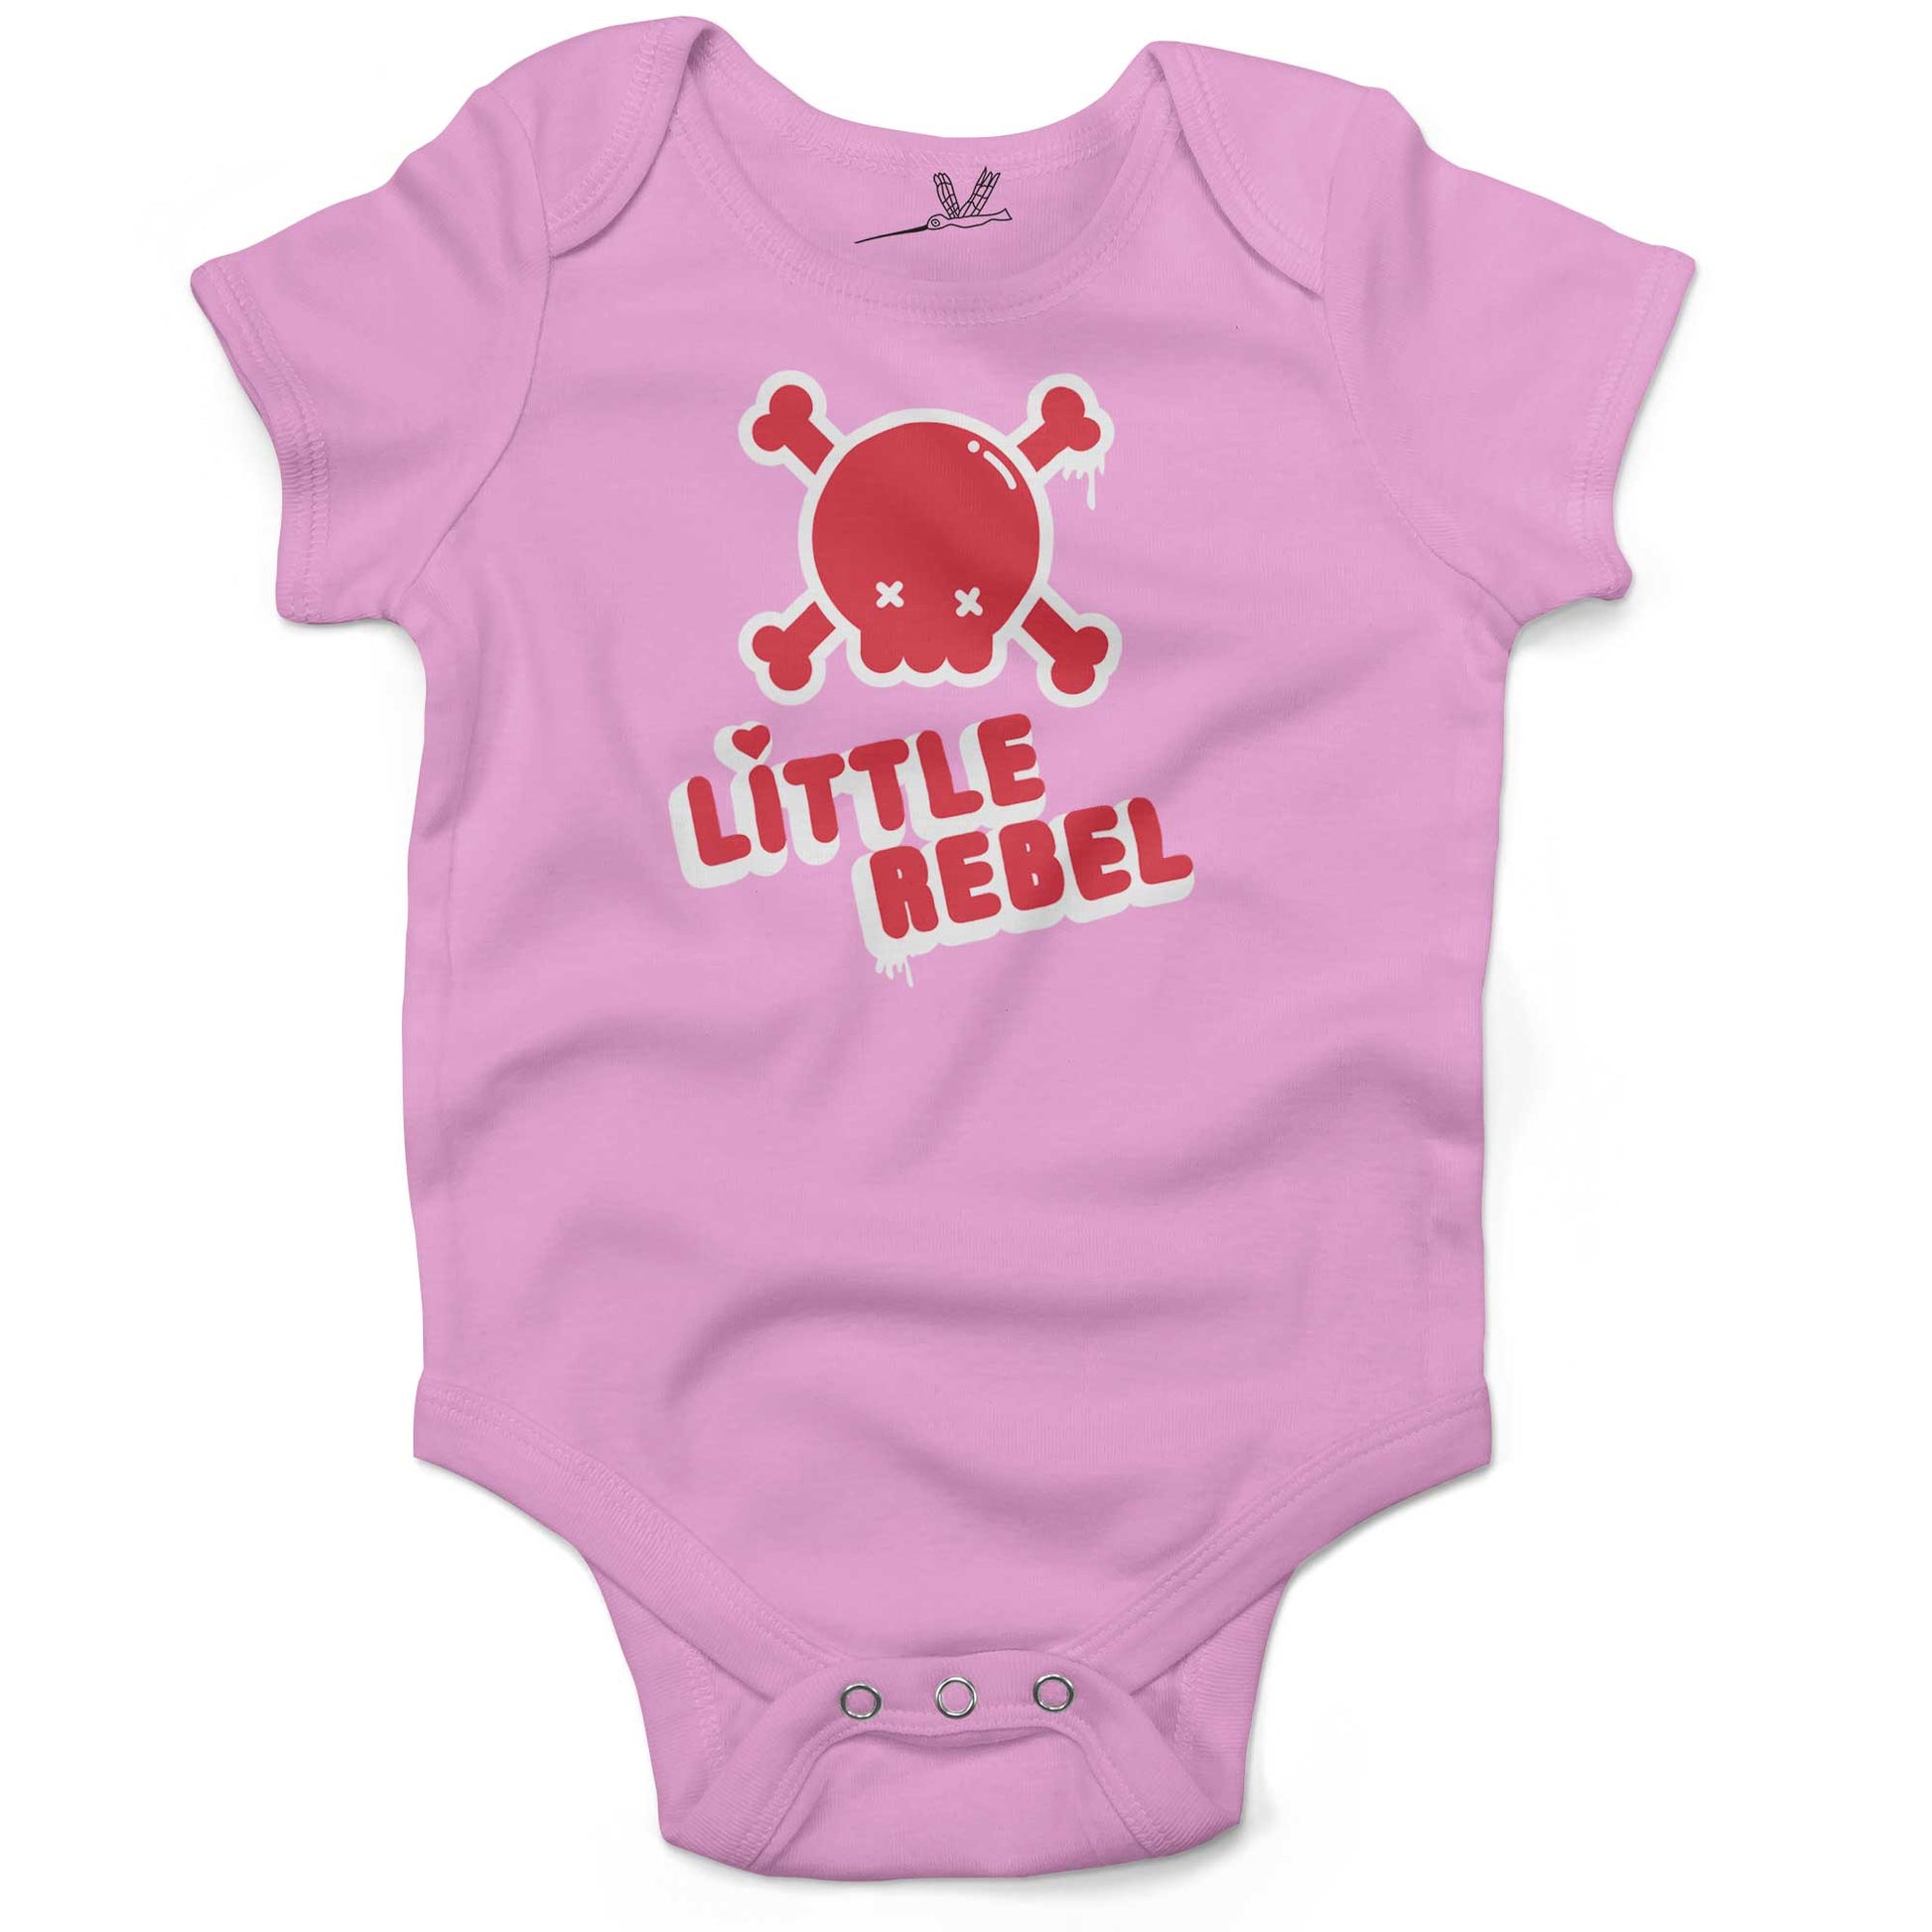 Little Rebel Infant Bodysuit or Raglan Baby Tee-Organic Pink-3-6 months